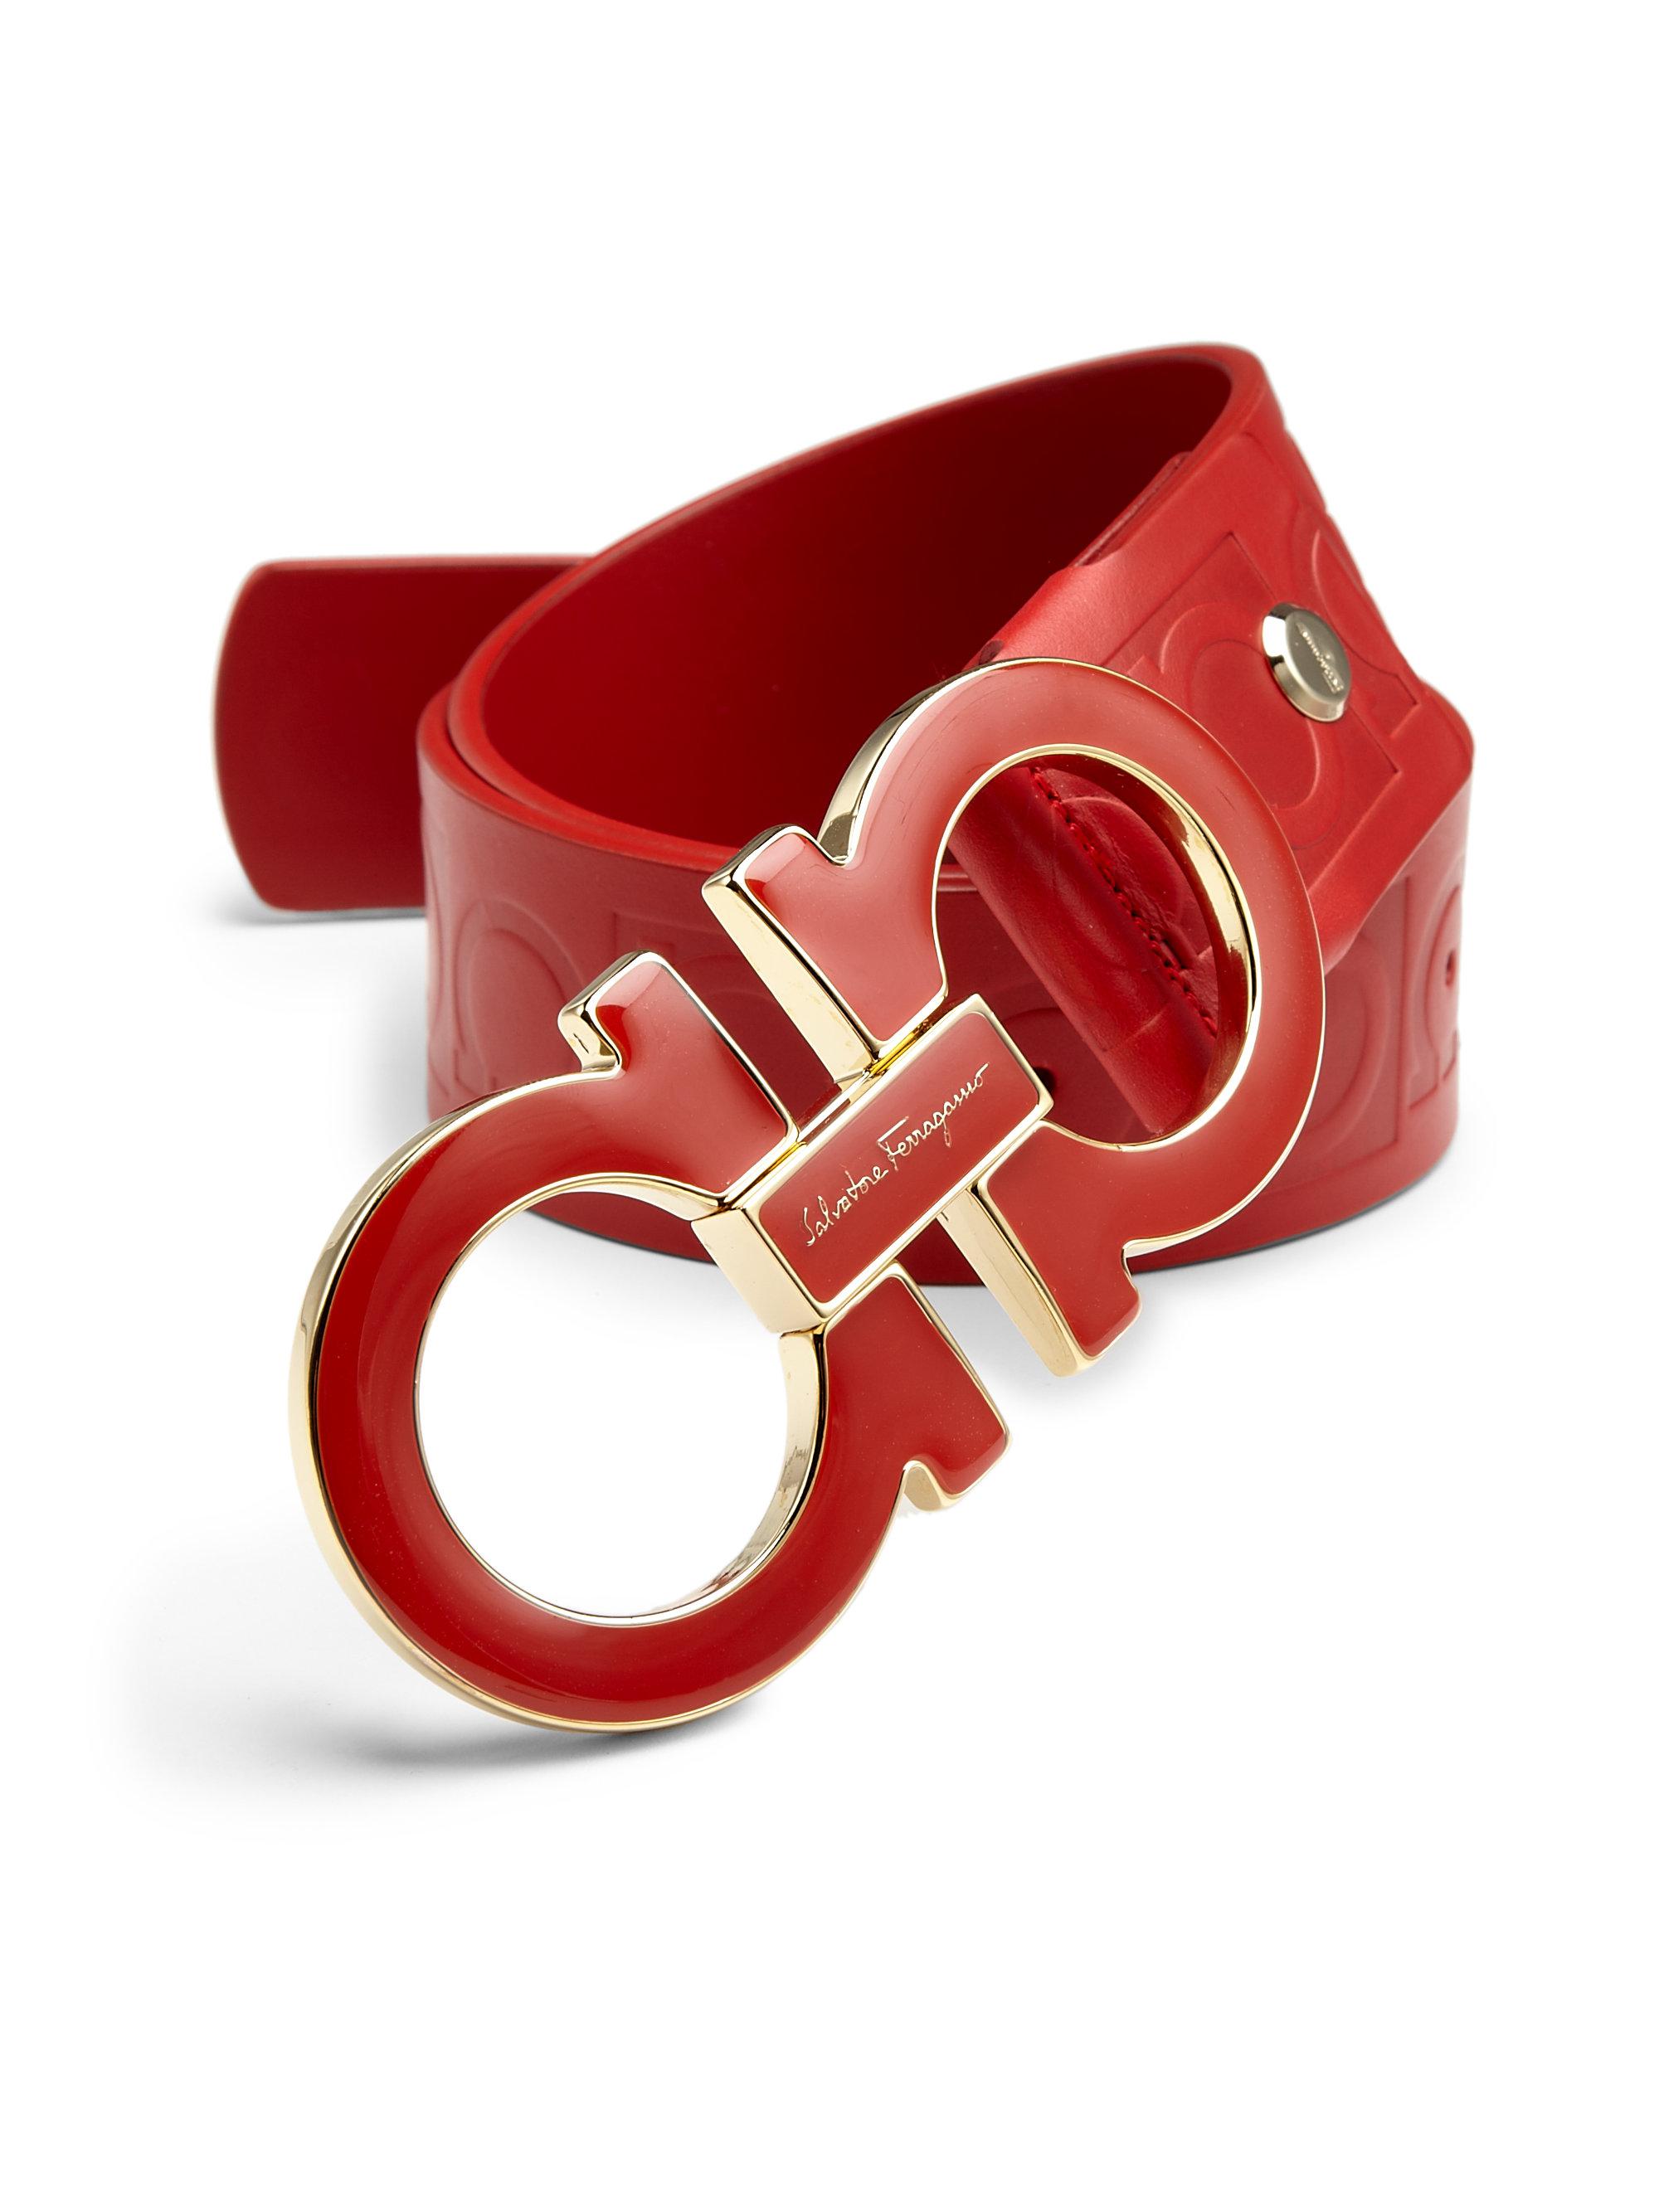 Lyst - Ferragamo Gancini Leather Belt in Red for Men